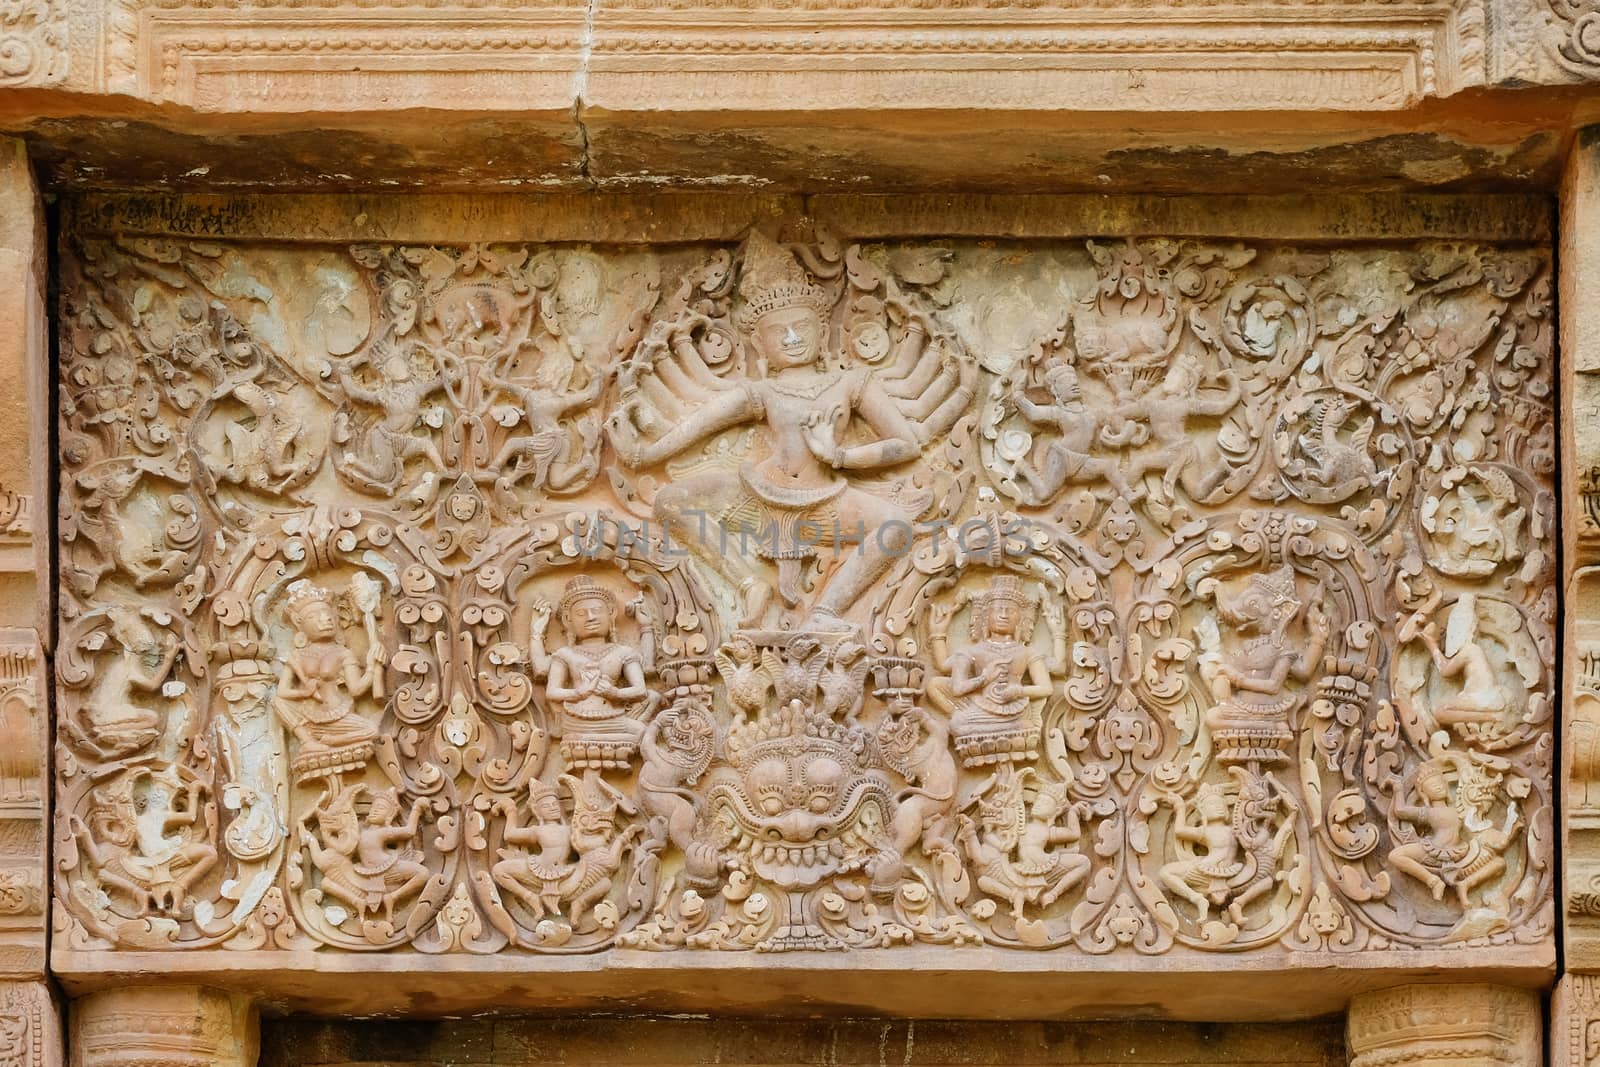 lintel at castle rock temple in Sikhoraphum, Surin, Thailand. Called "Prasat Sikhoraphum"